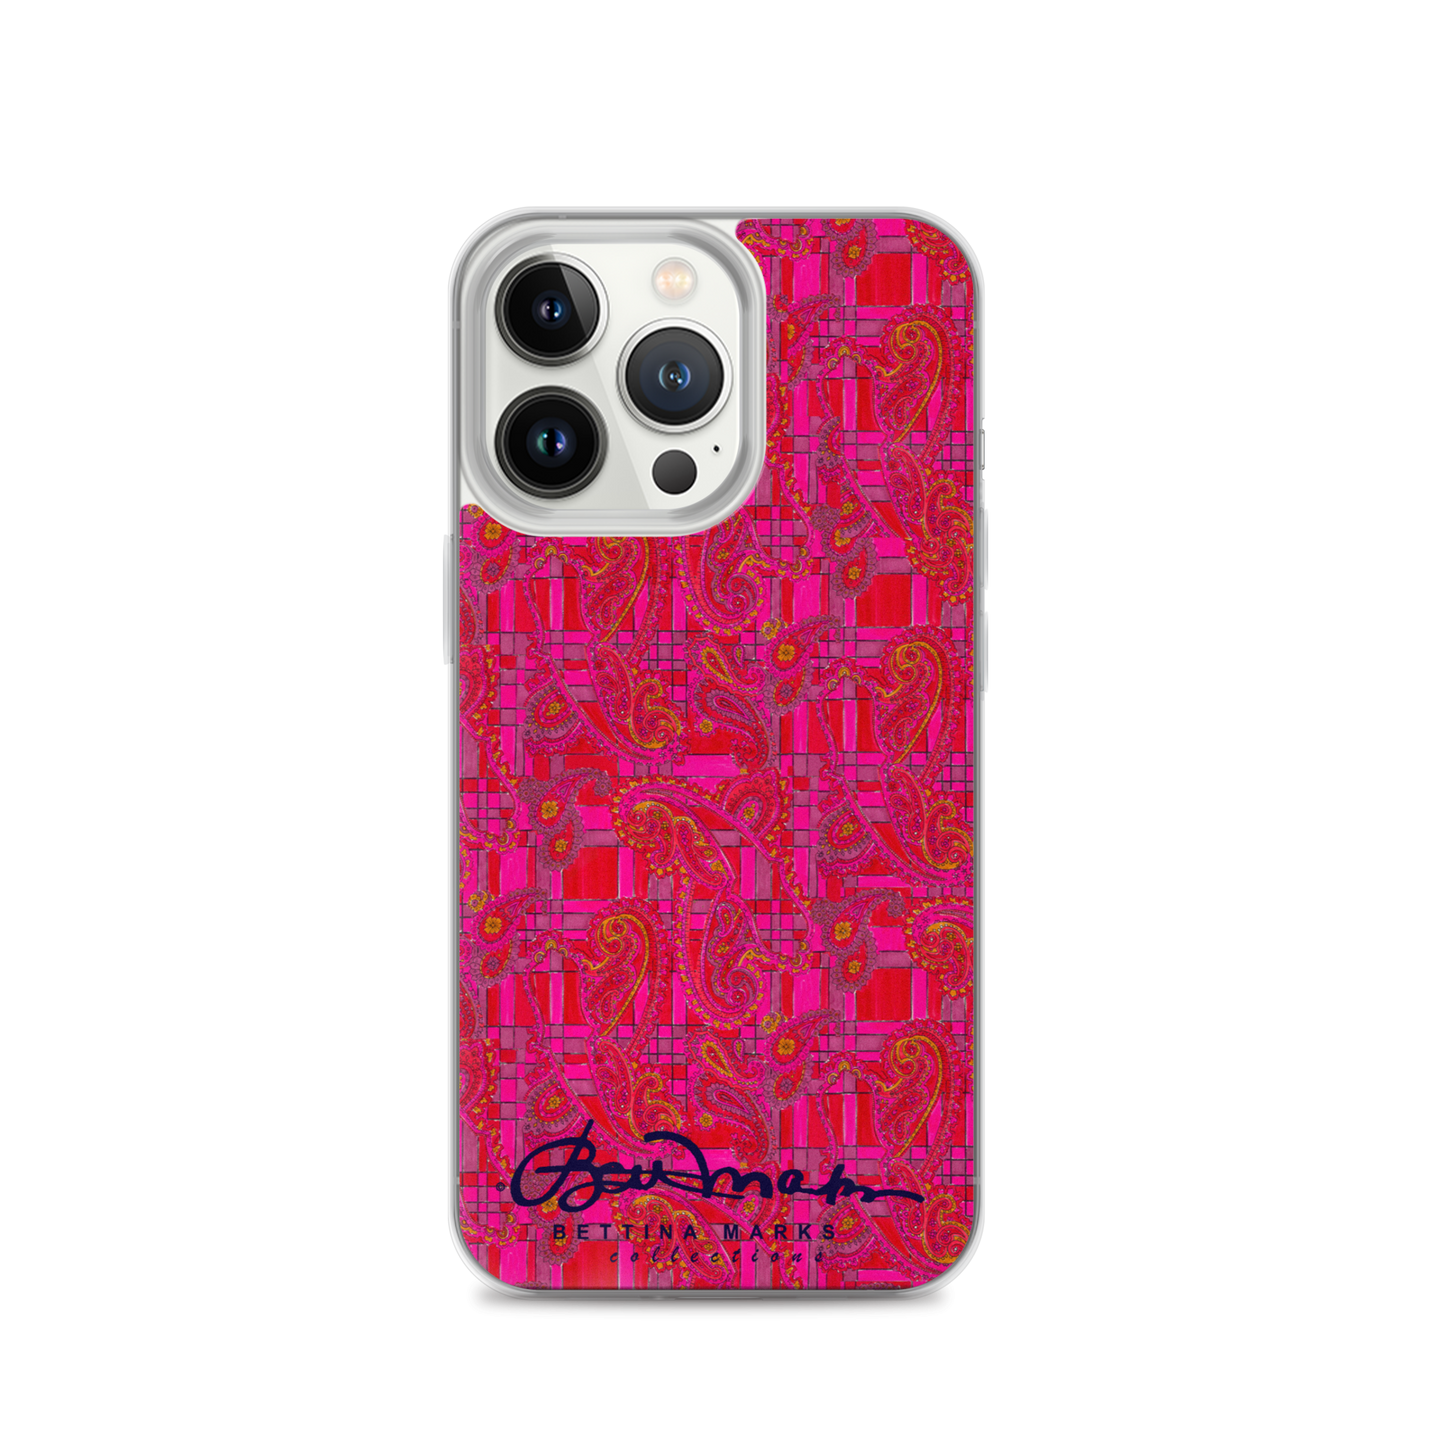 Hot Pink iPhone X Case